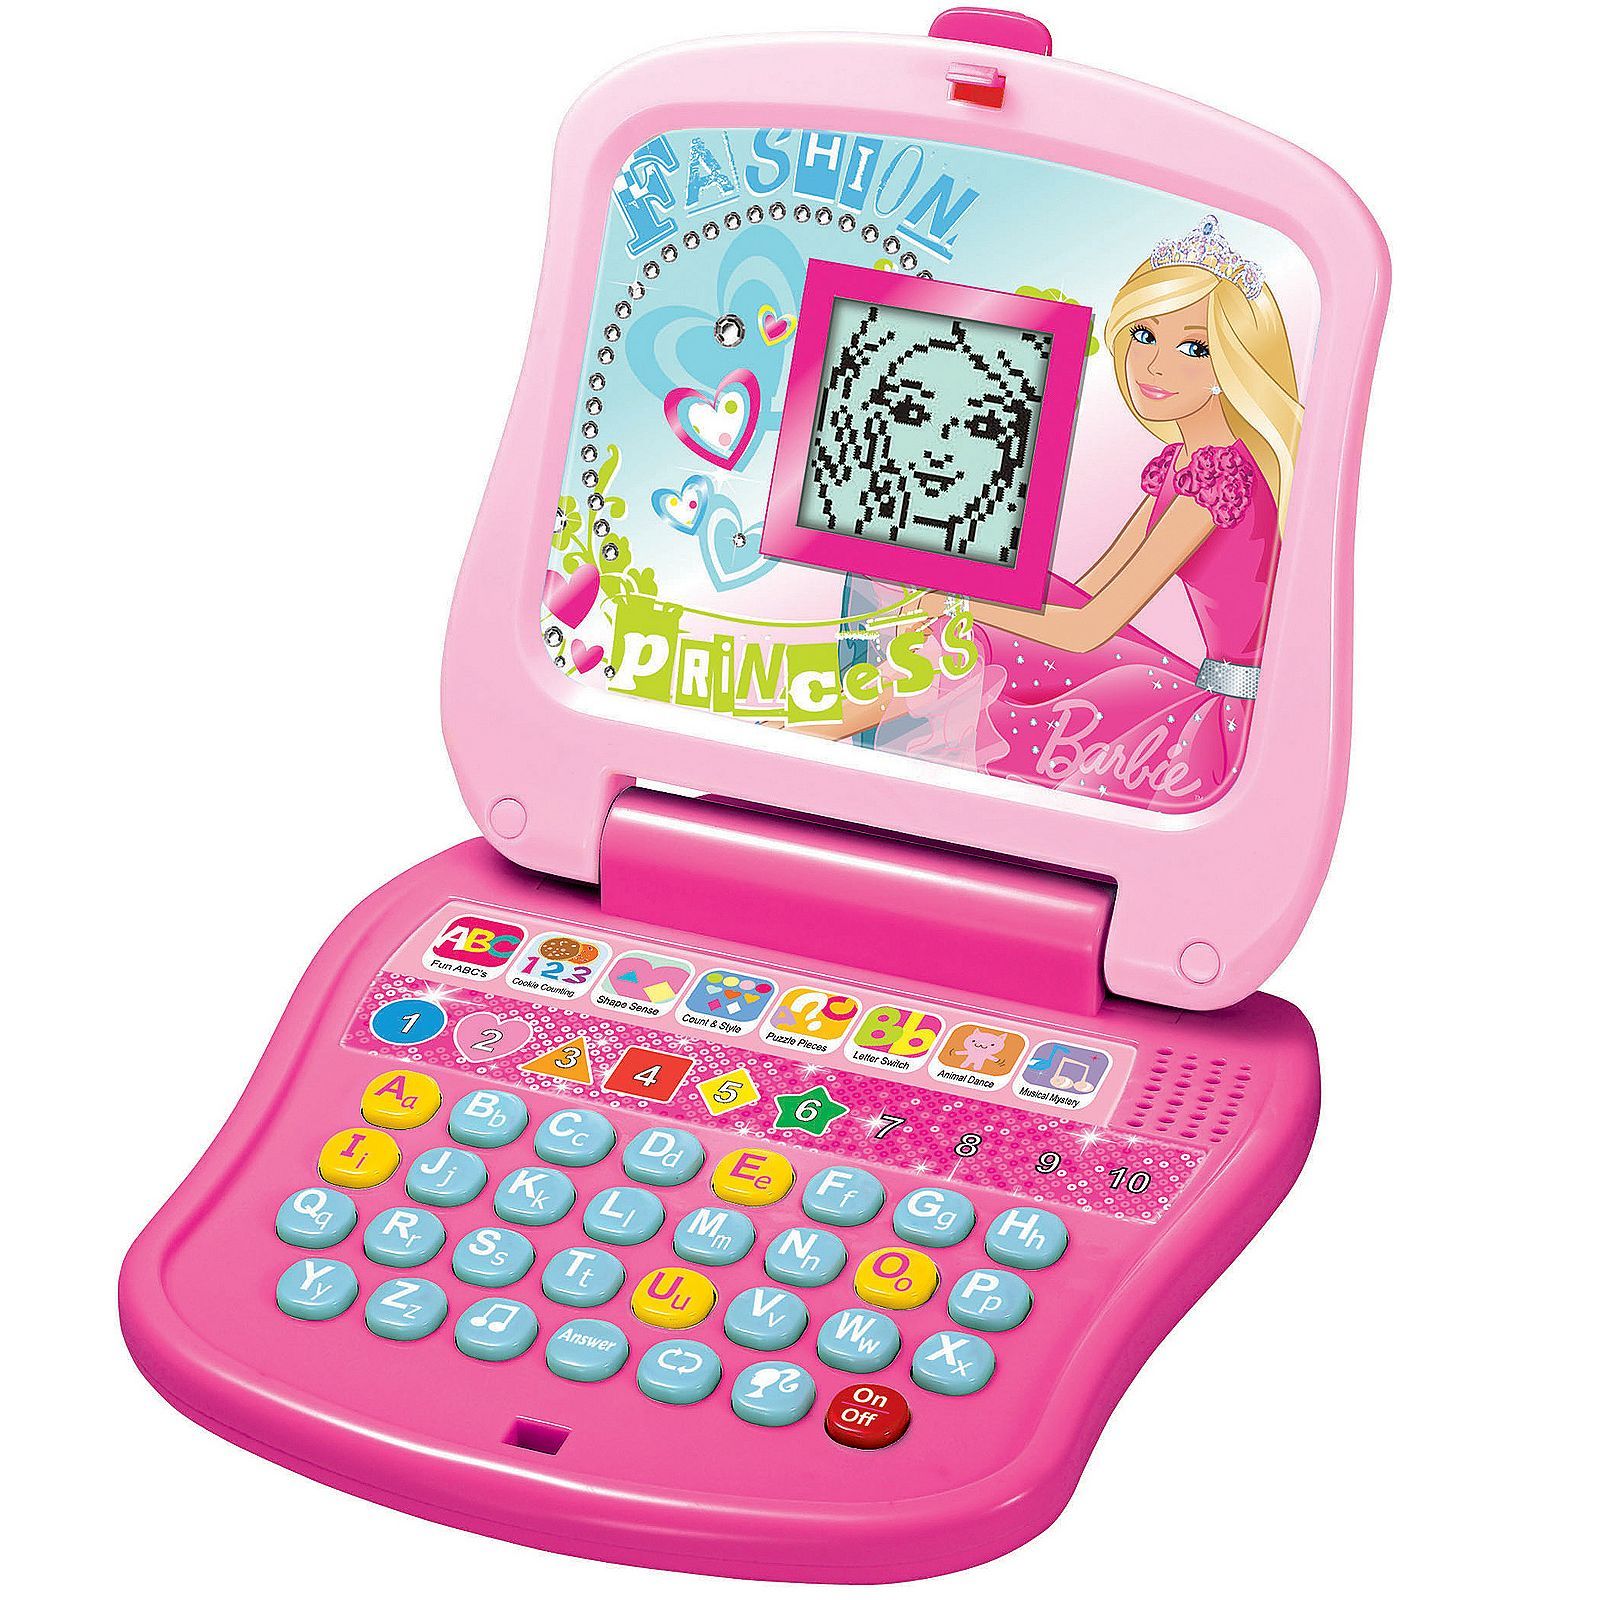 Barbie-laptop-BJ68-10-1